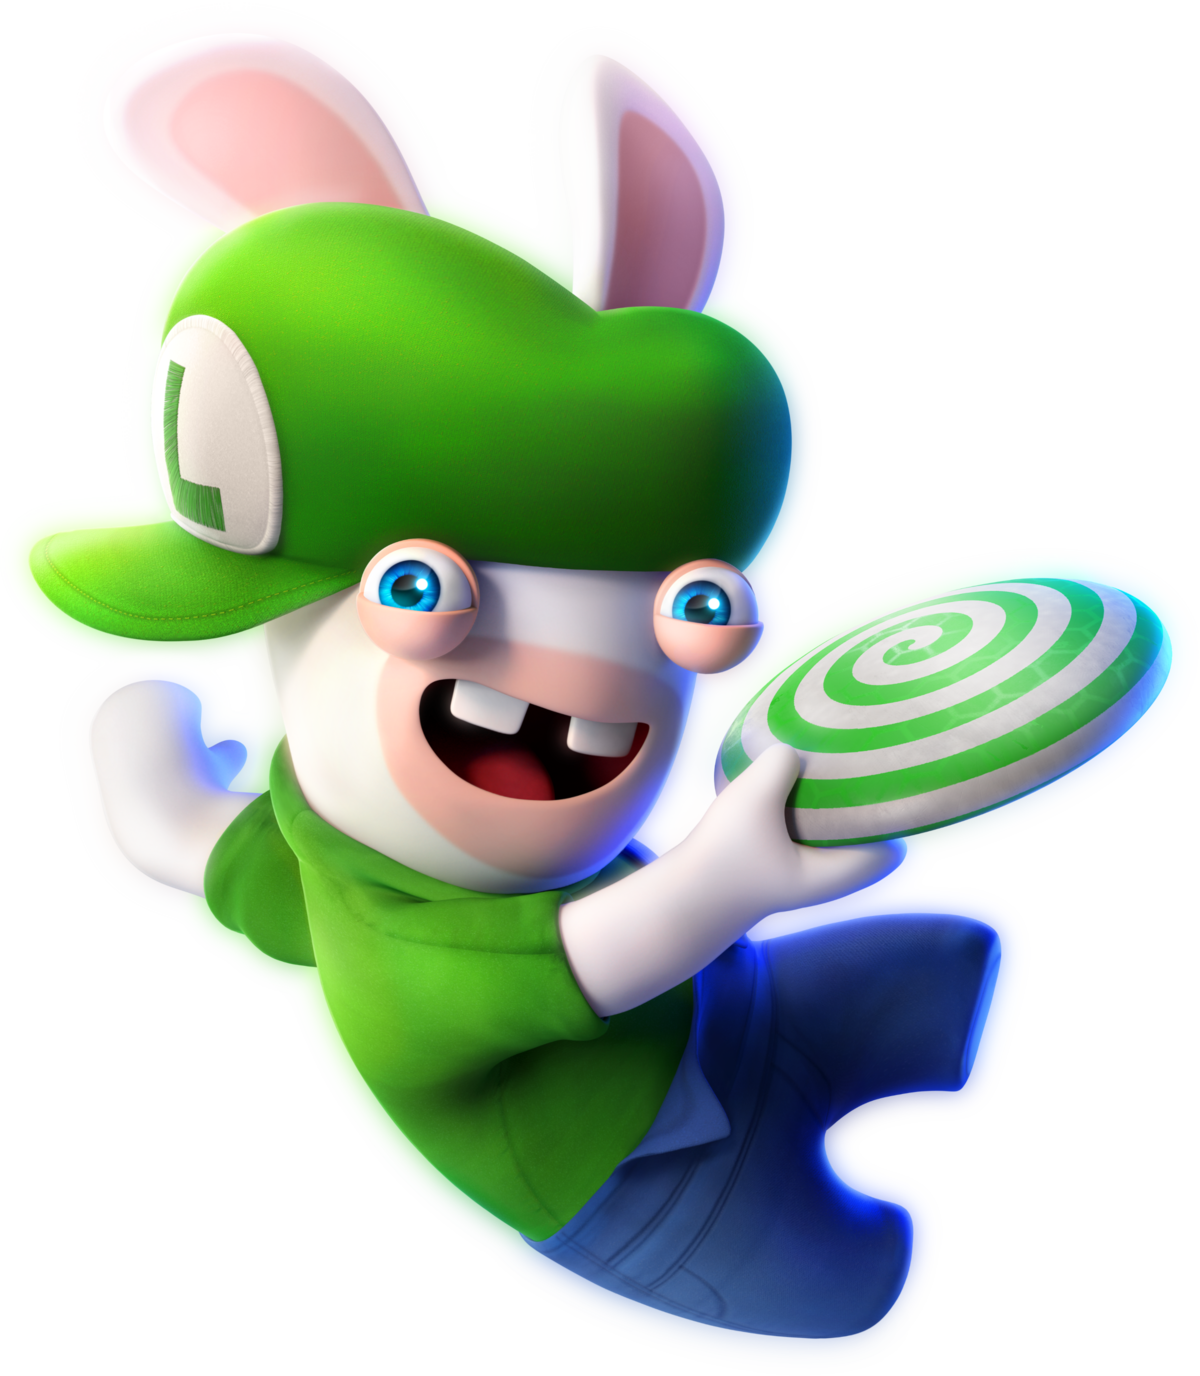 Rabbid Luigi - Super Mario Wiki, the Mario encyclopedia